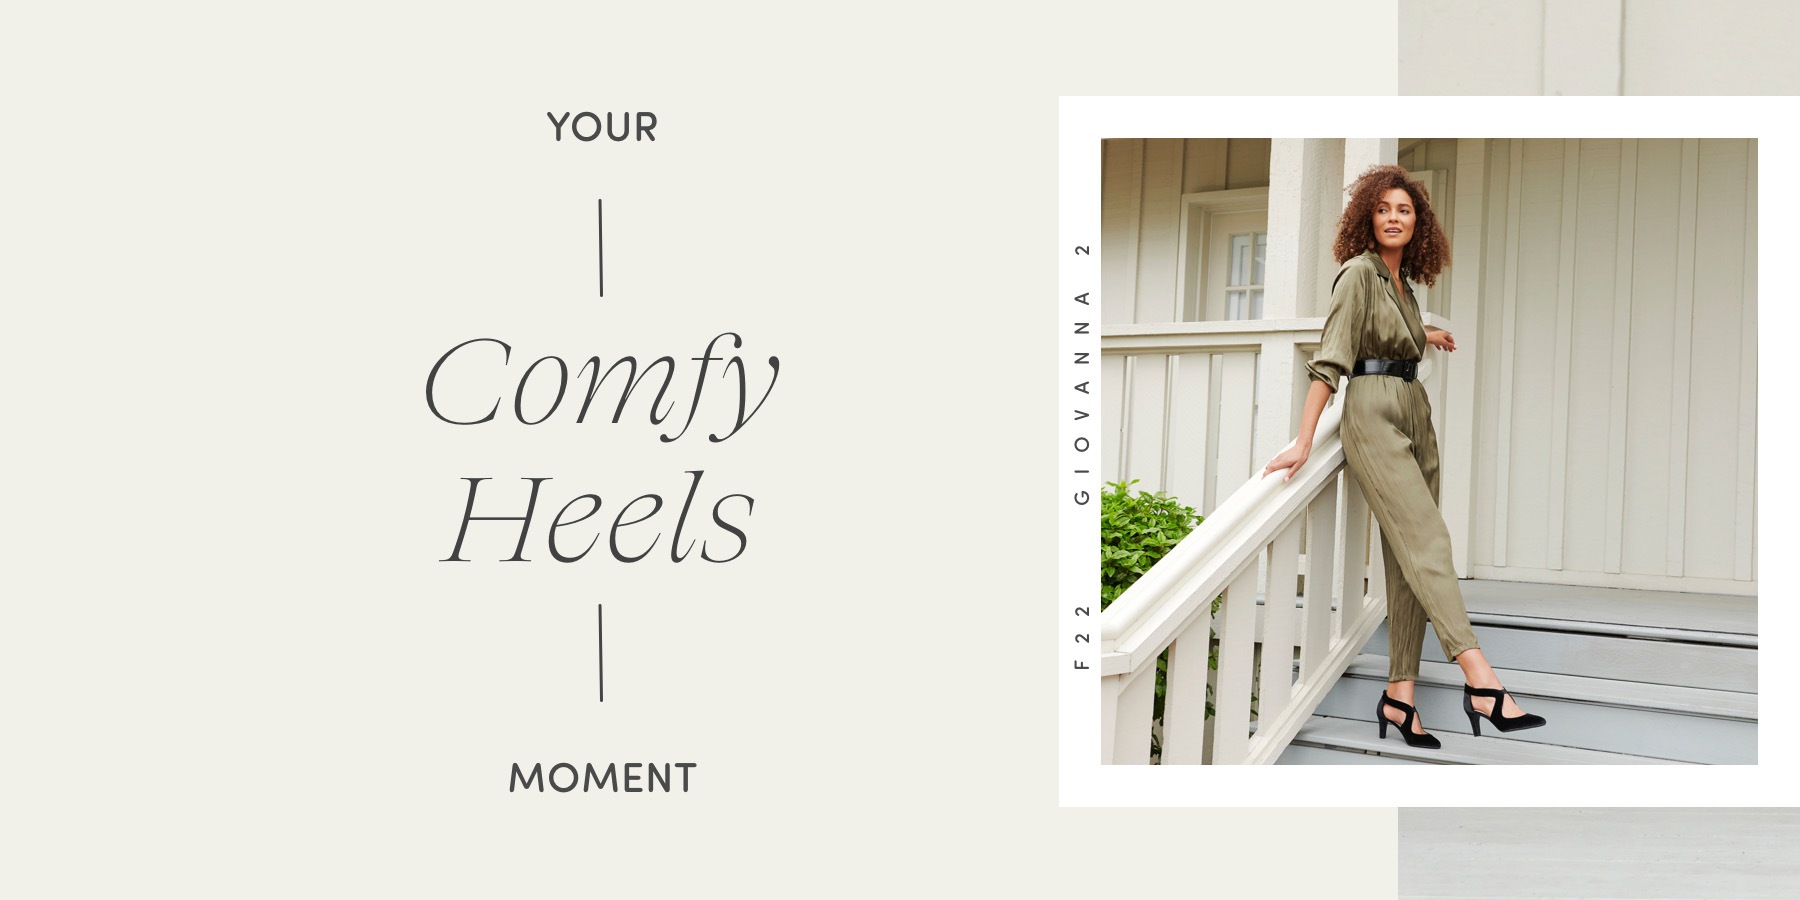 Your Comfy Heels Moment